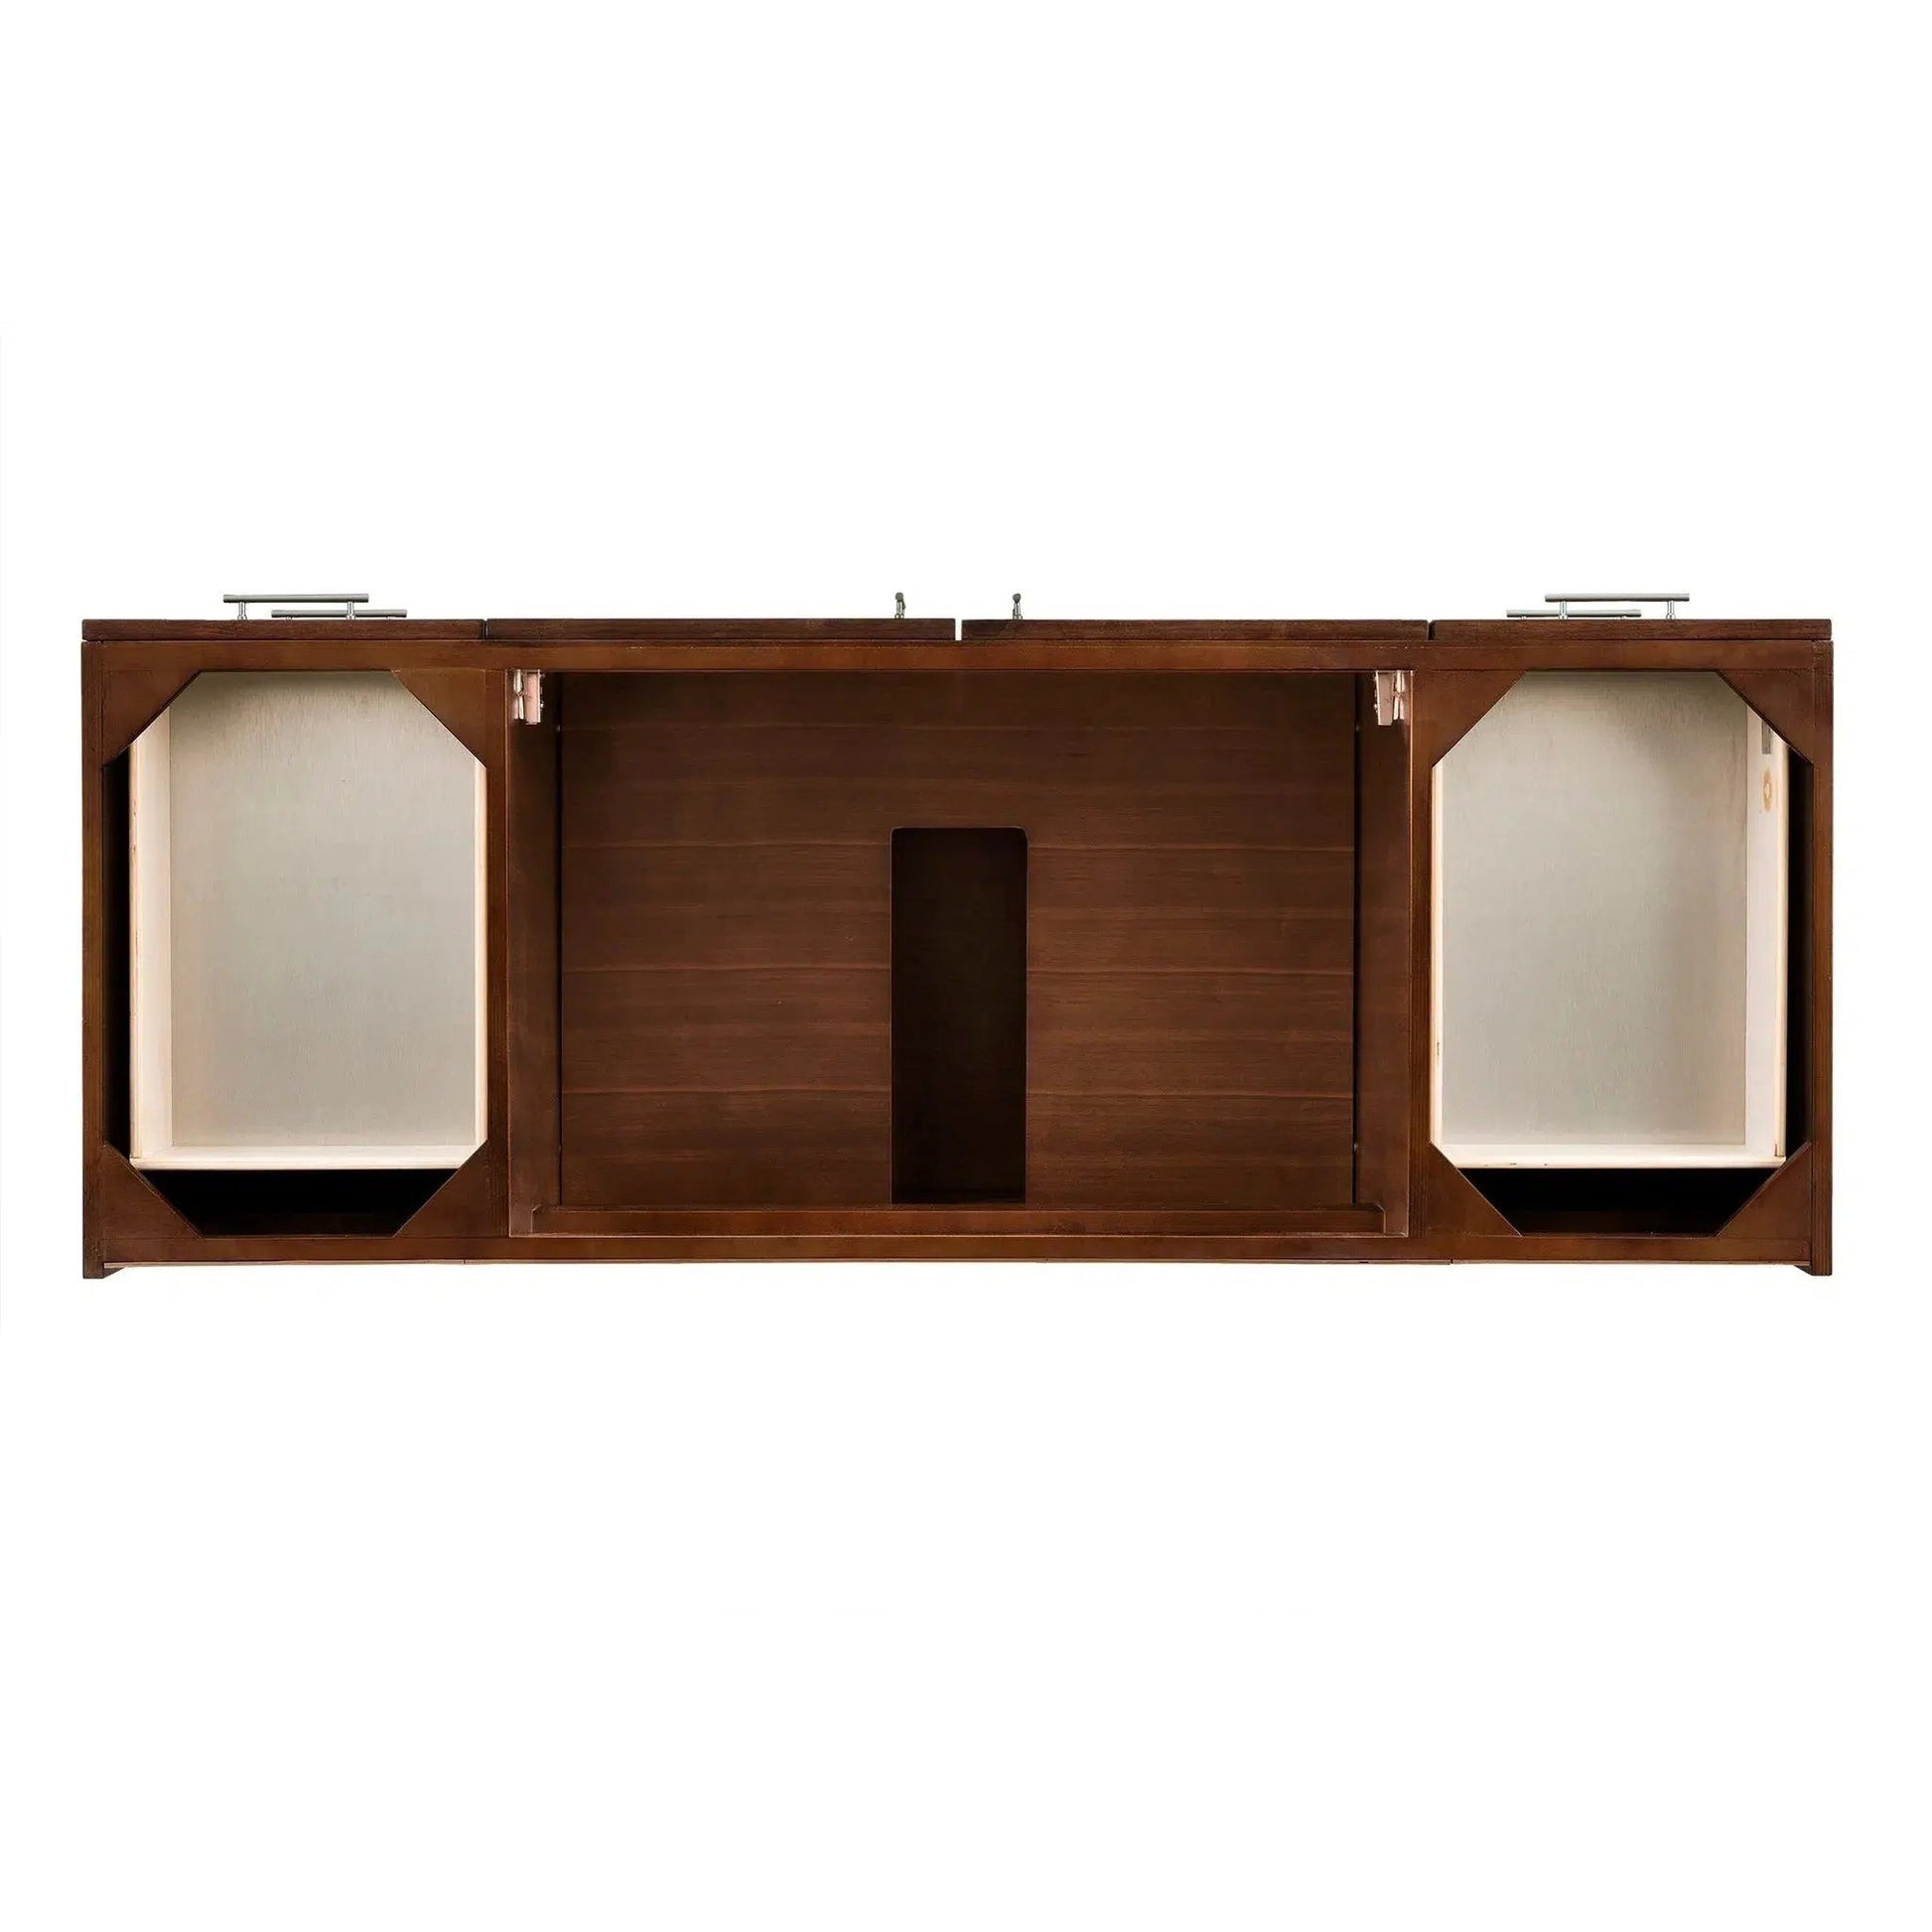 James Martin Metropolitan 60" Single American Walnut Bathroom Vanity With 1" Gray Expo Quartz Top and Rectangular Ceramic Sink